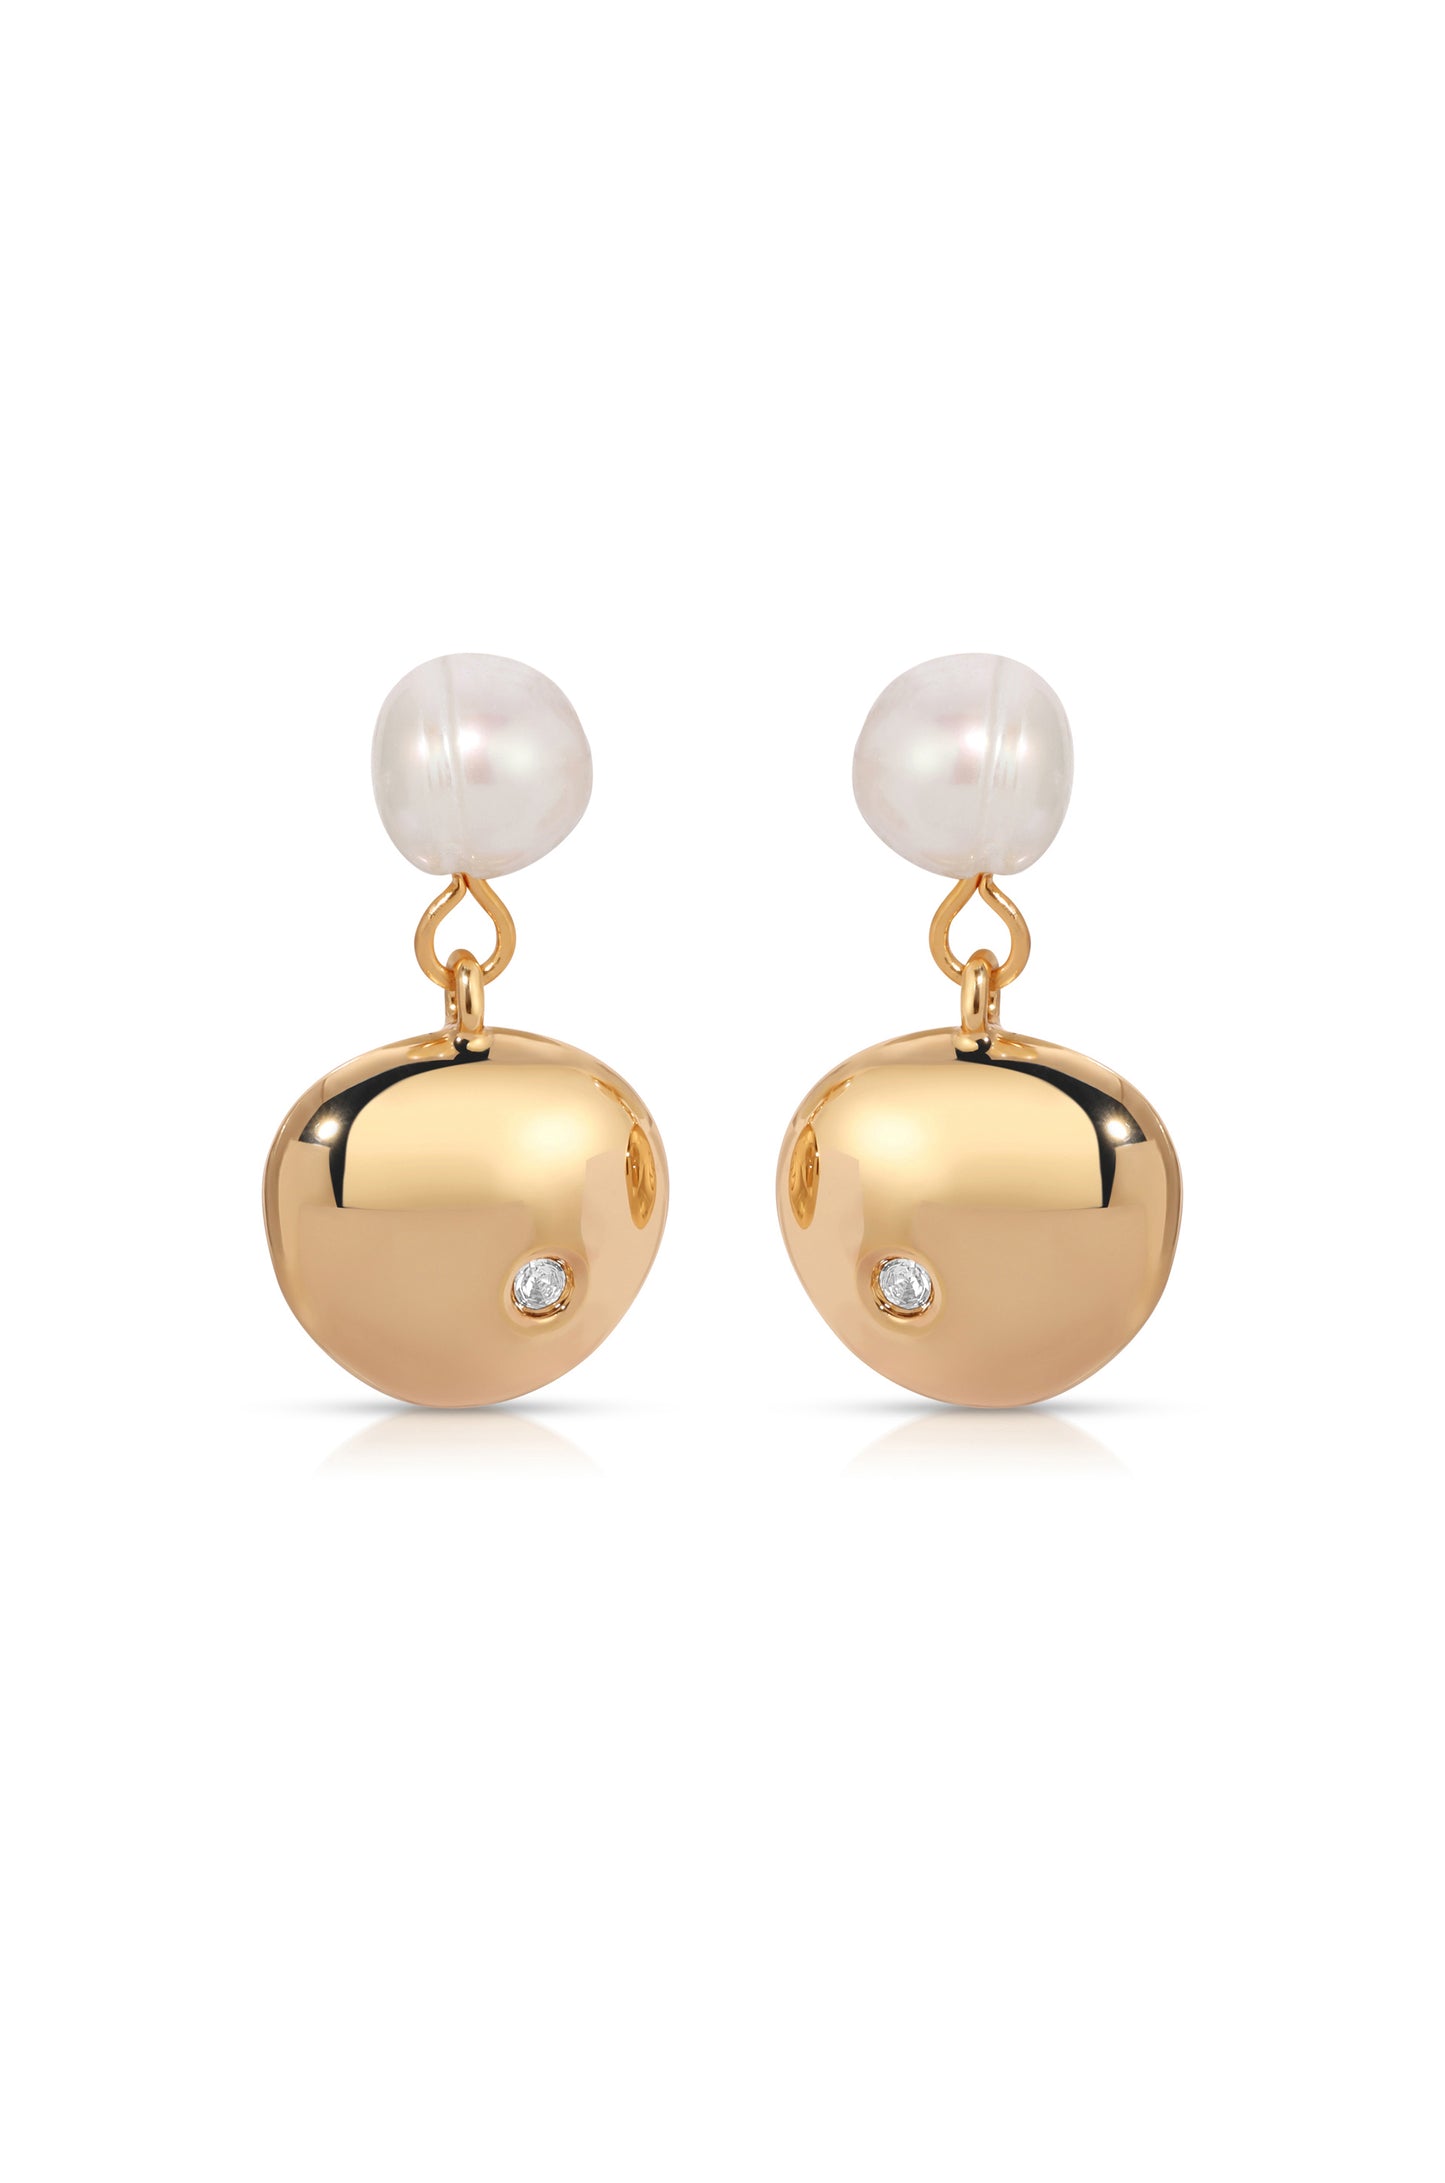 Small Pebble and Pearl Dangle Earrings